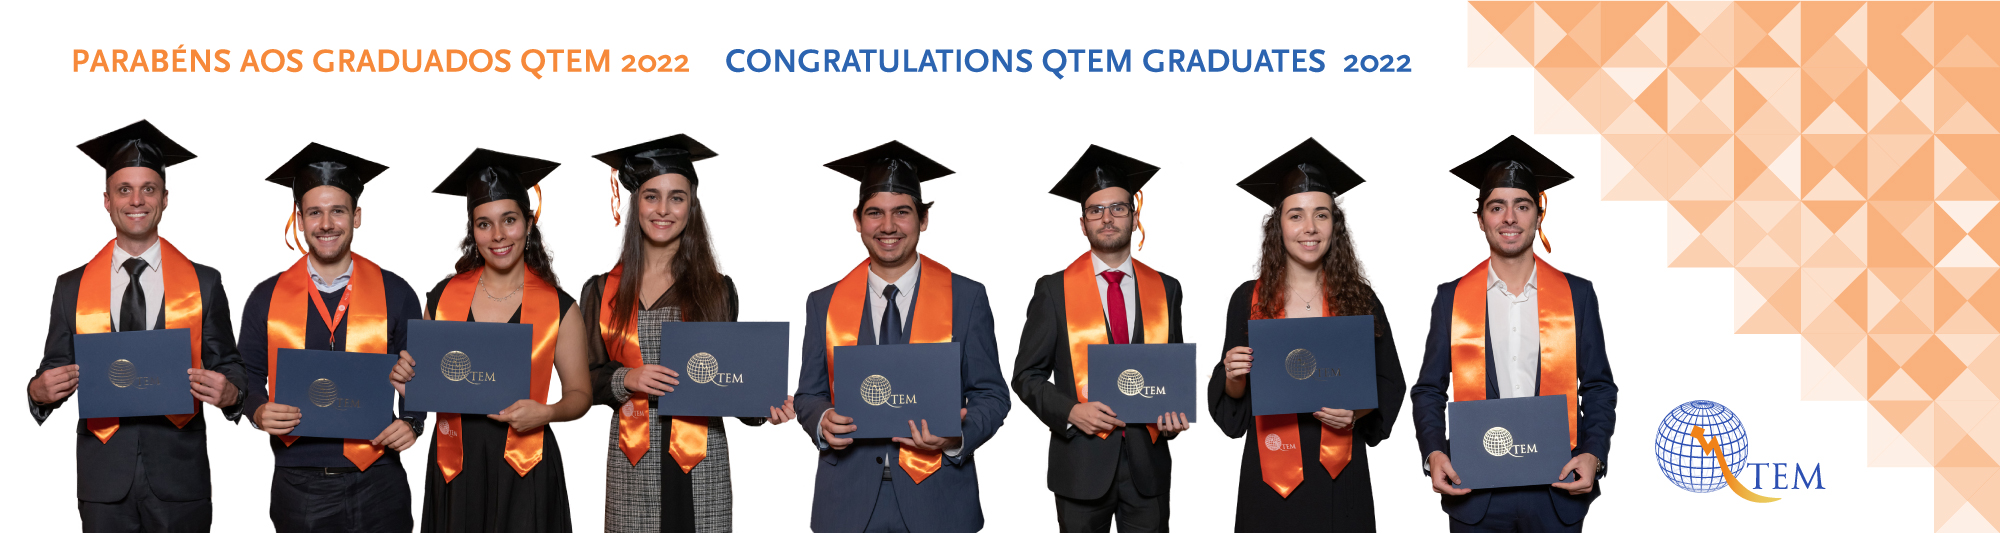 Parabéns aos Graduados QTEM 2022